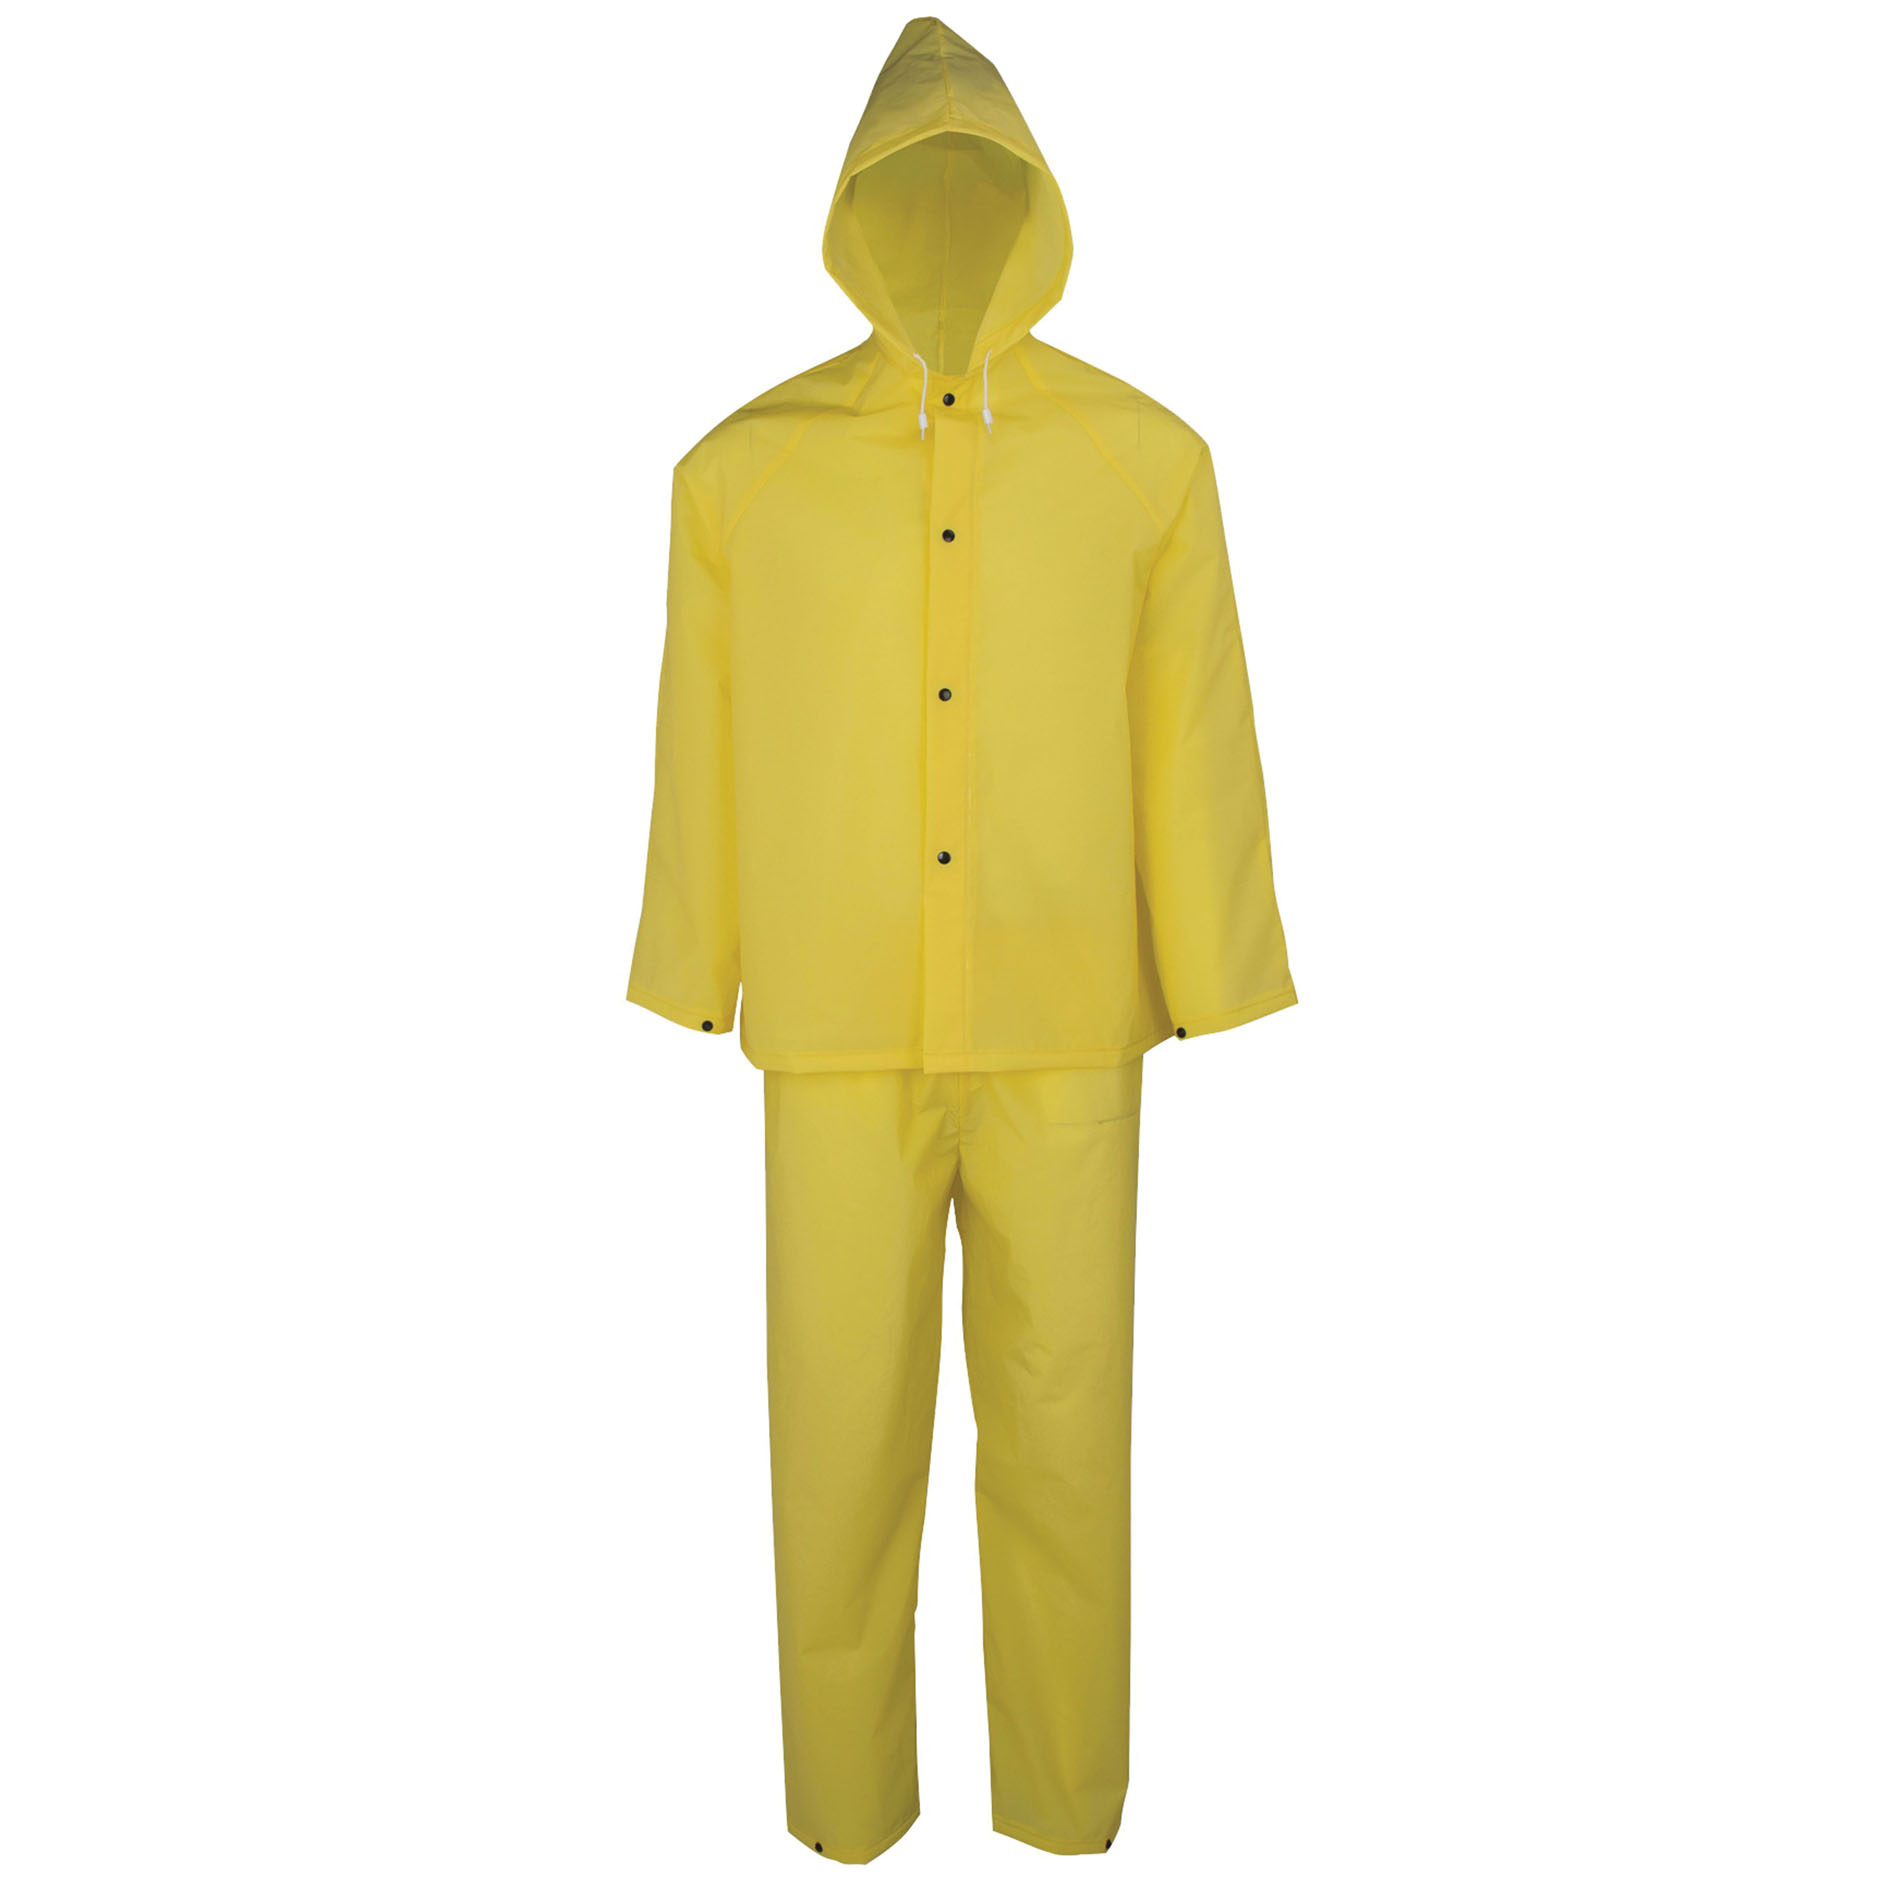 RS2-01-M Rain Suit, M, 41 in Inseam, EVA, Yellow, Hooded Collar, Snap Down Storm Flap Closure